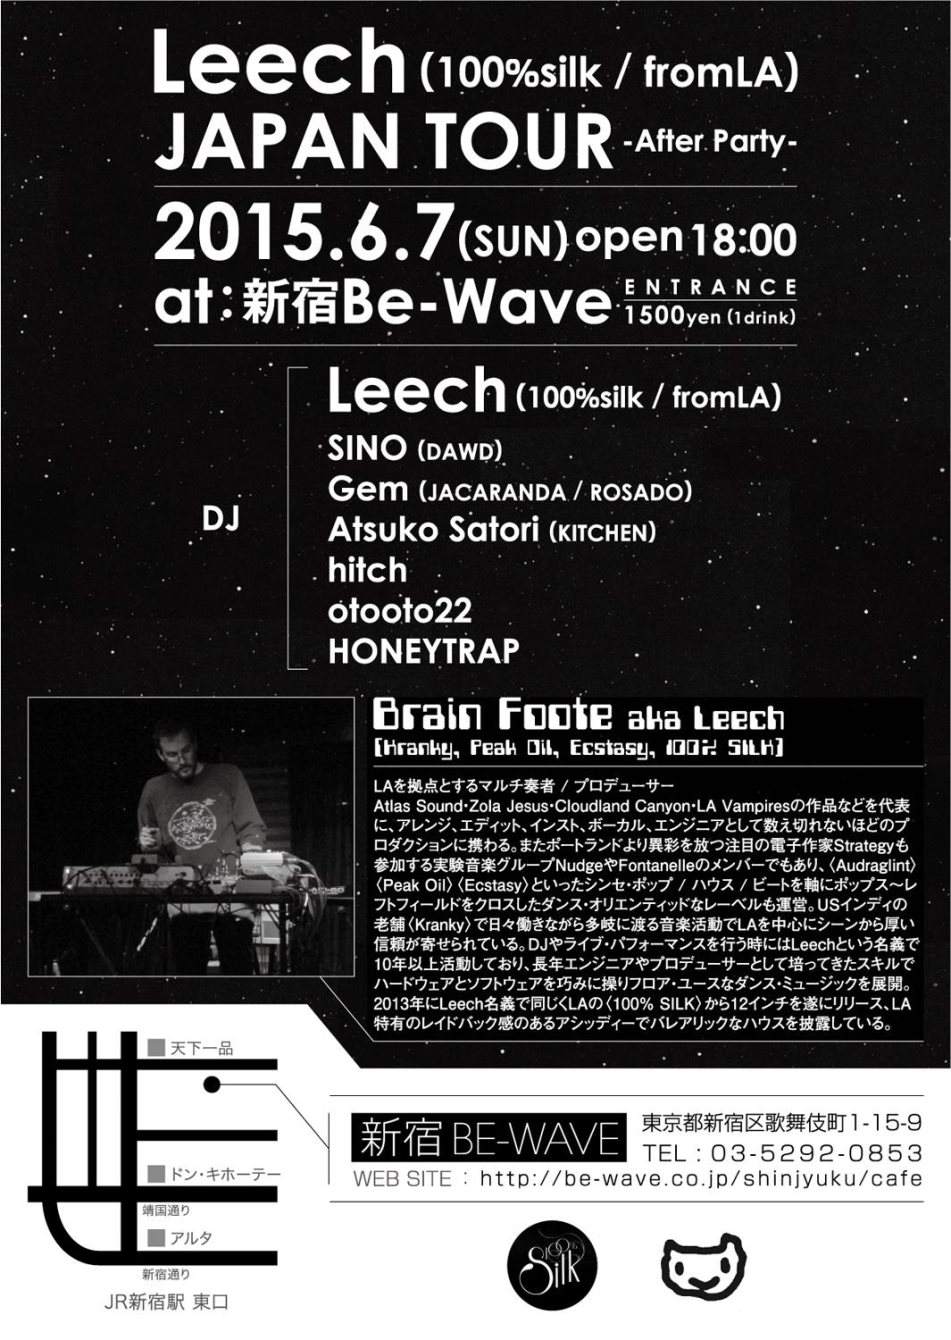 Leech Japan Tour -After Party - フライヤー裏